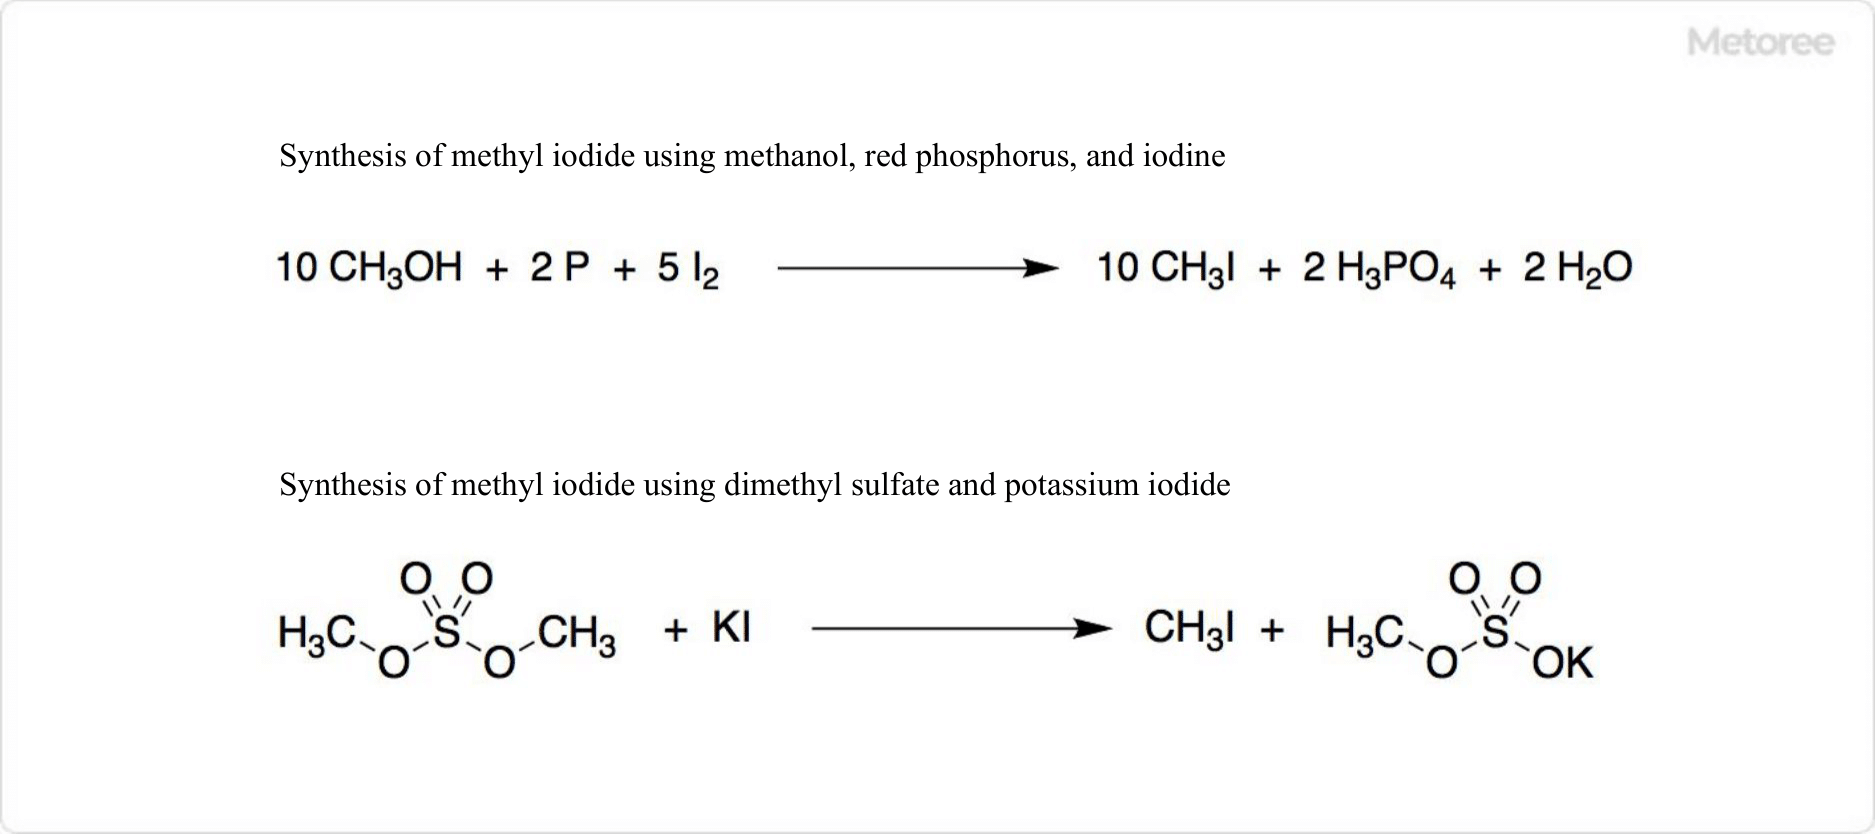 Figure 3. Synthesis of methyl iodide